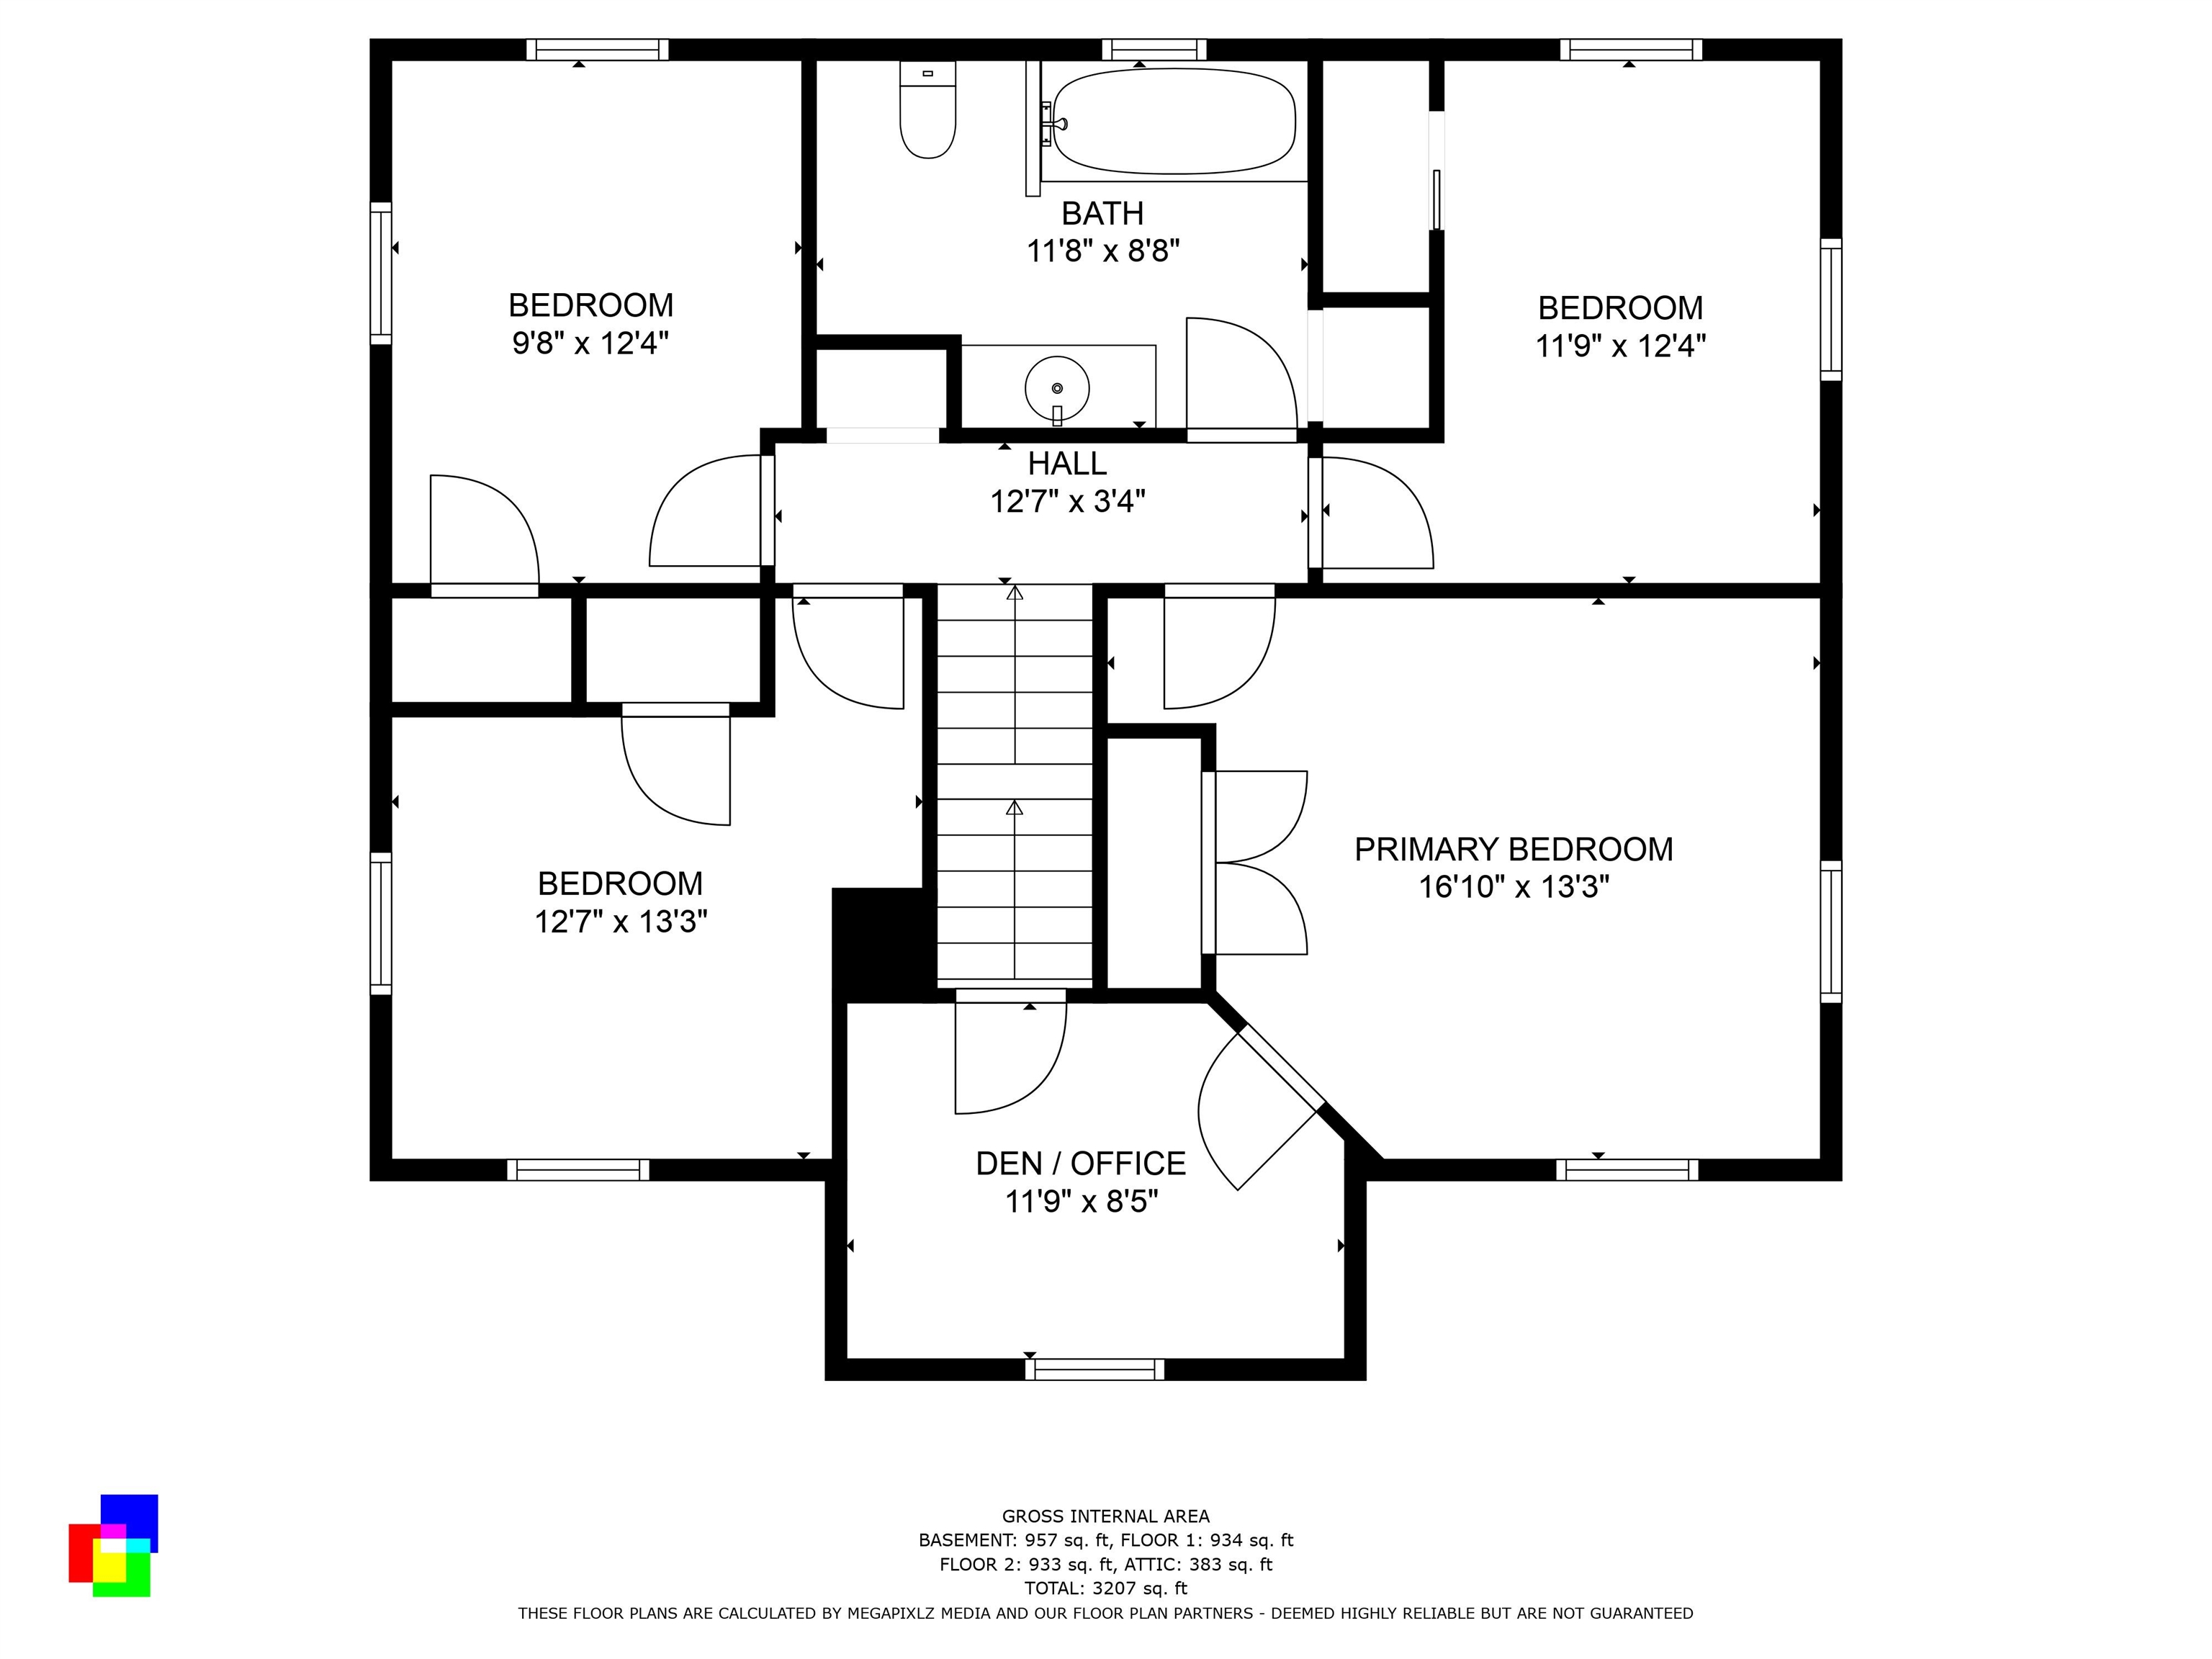 Second level floor plan